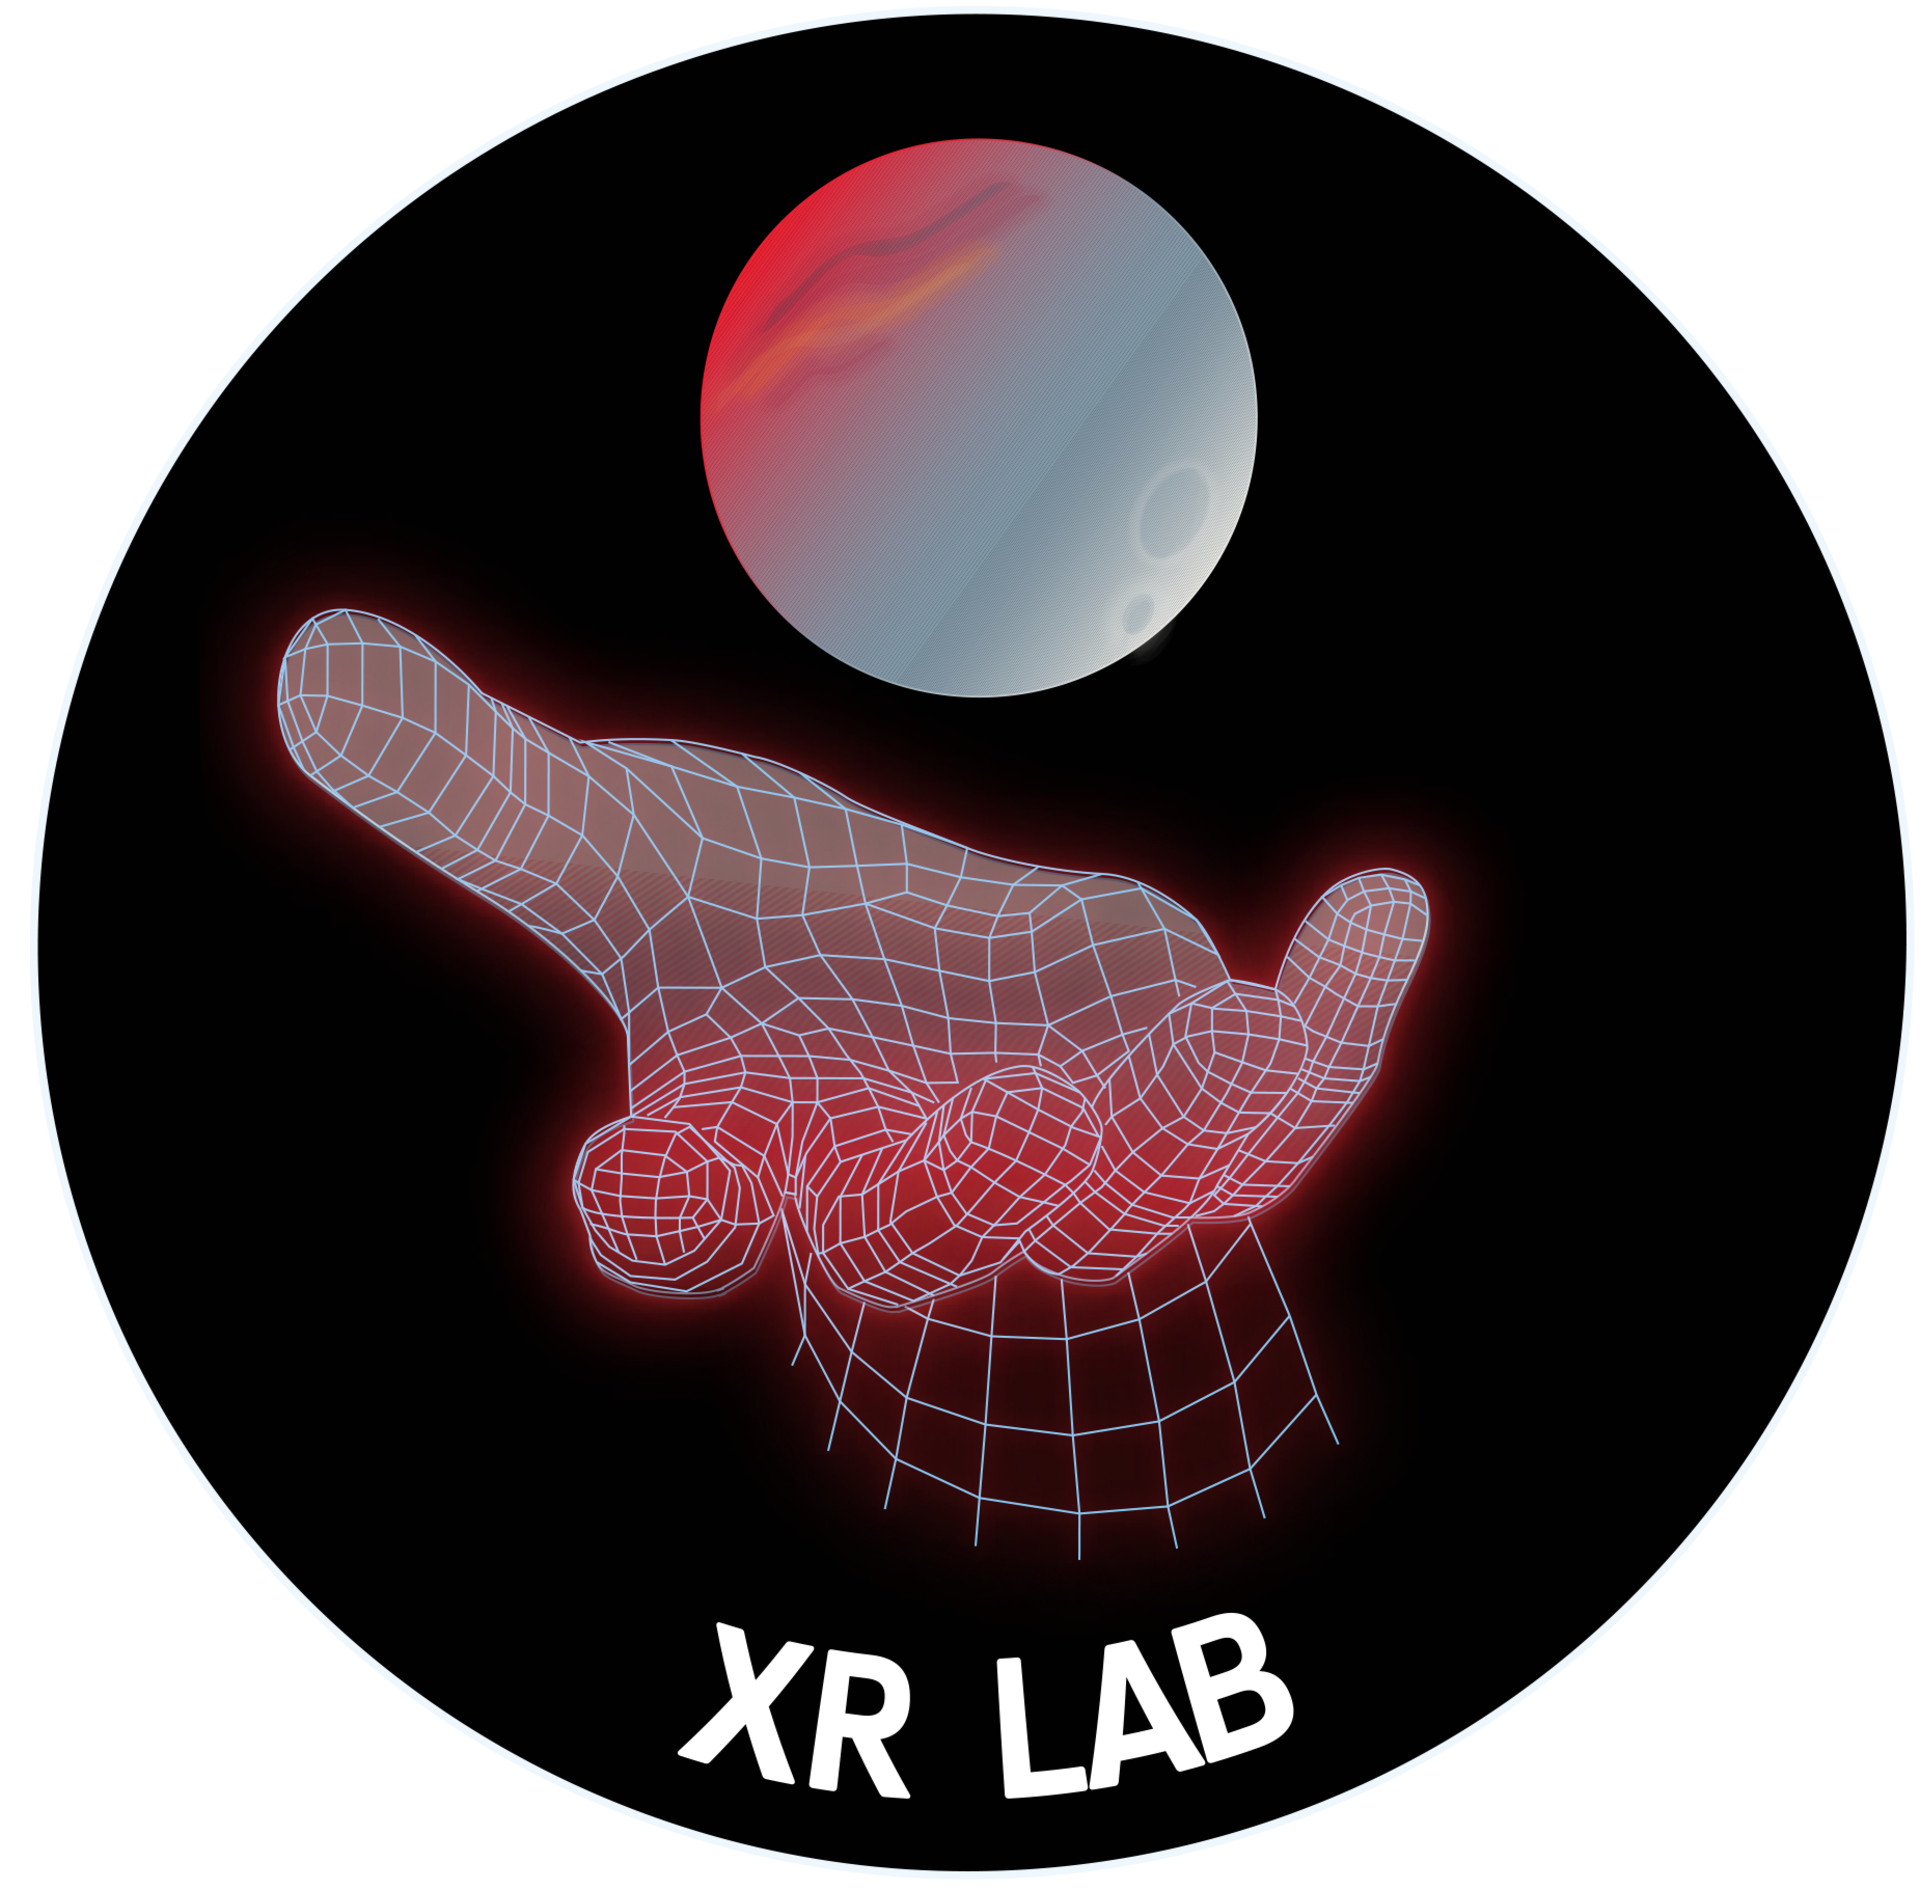 XR Lab emblem